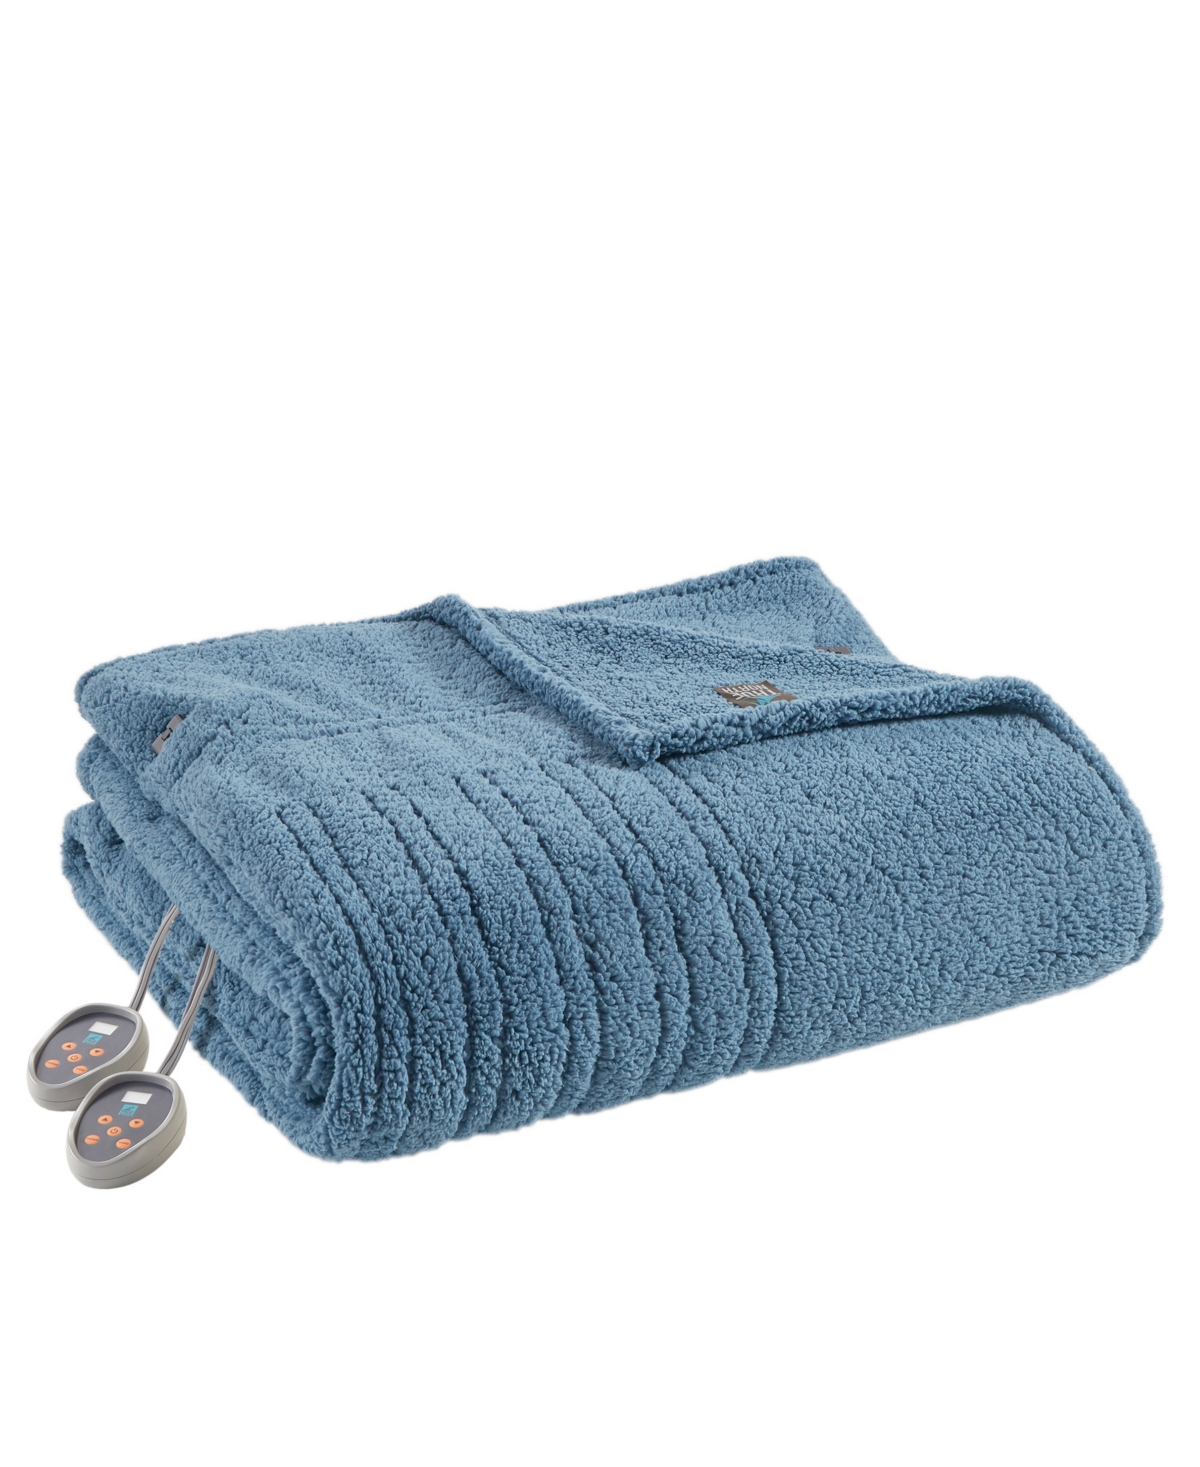 Sleep Philosophy Sherpa Heated Blanket, Full In Blue